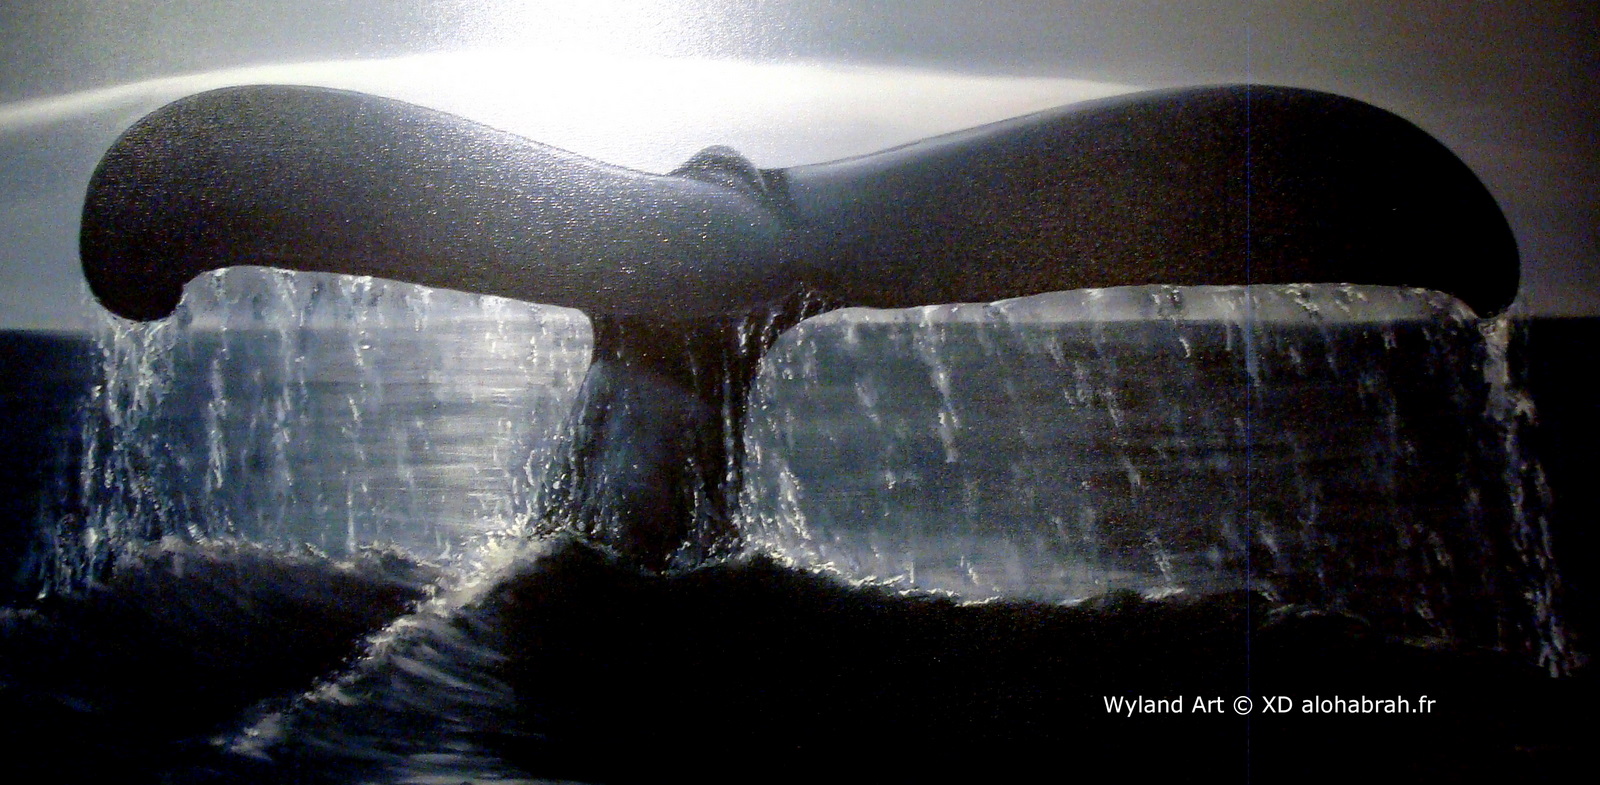 Wale Fin - Wyland Art © XD alohabrah.fr